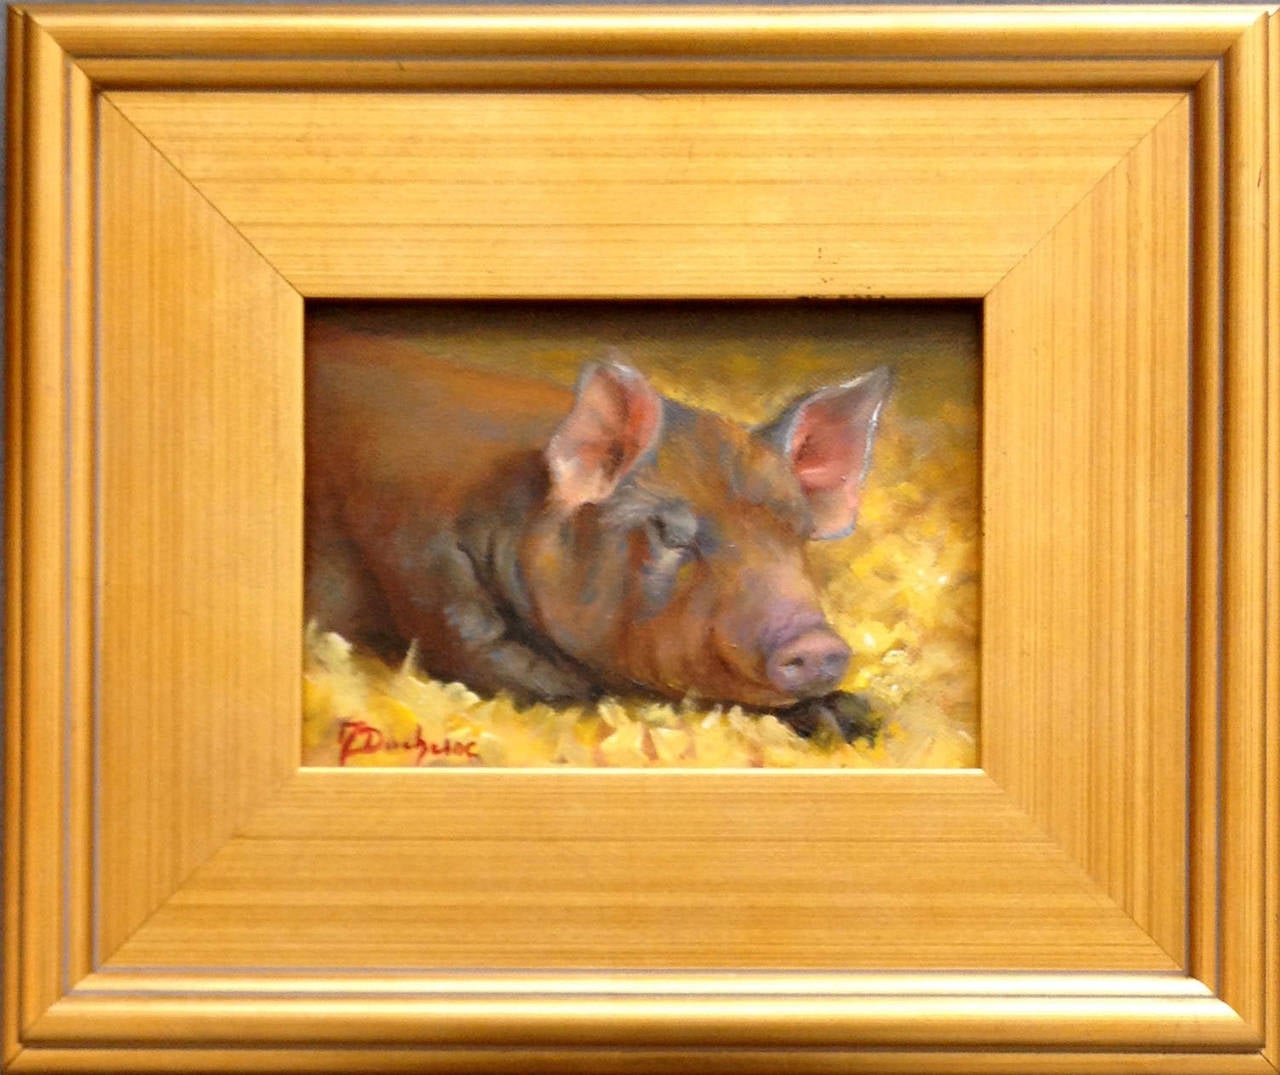 Sleeping Piglet - Painting by Mireille Duchesne